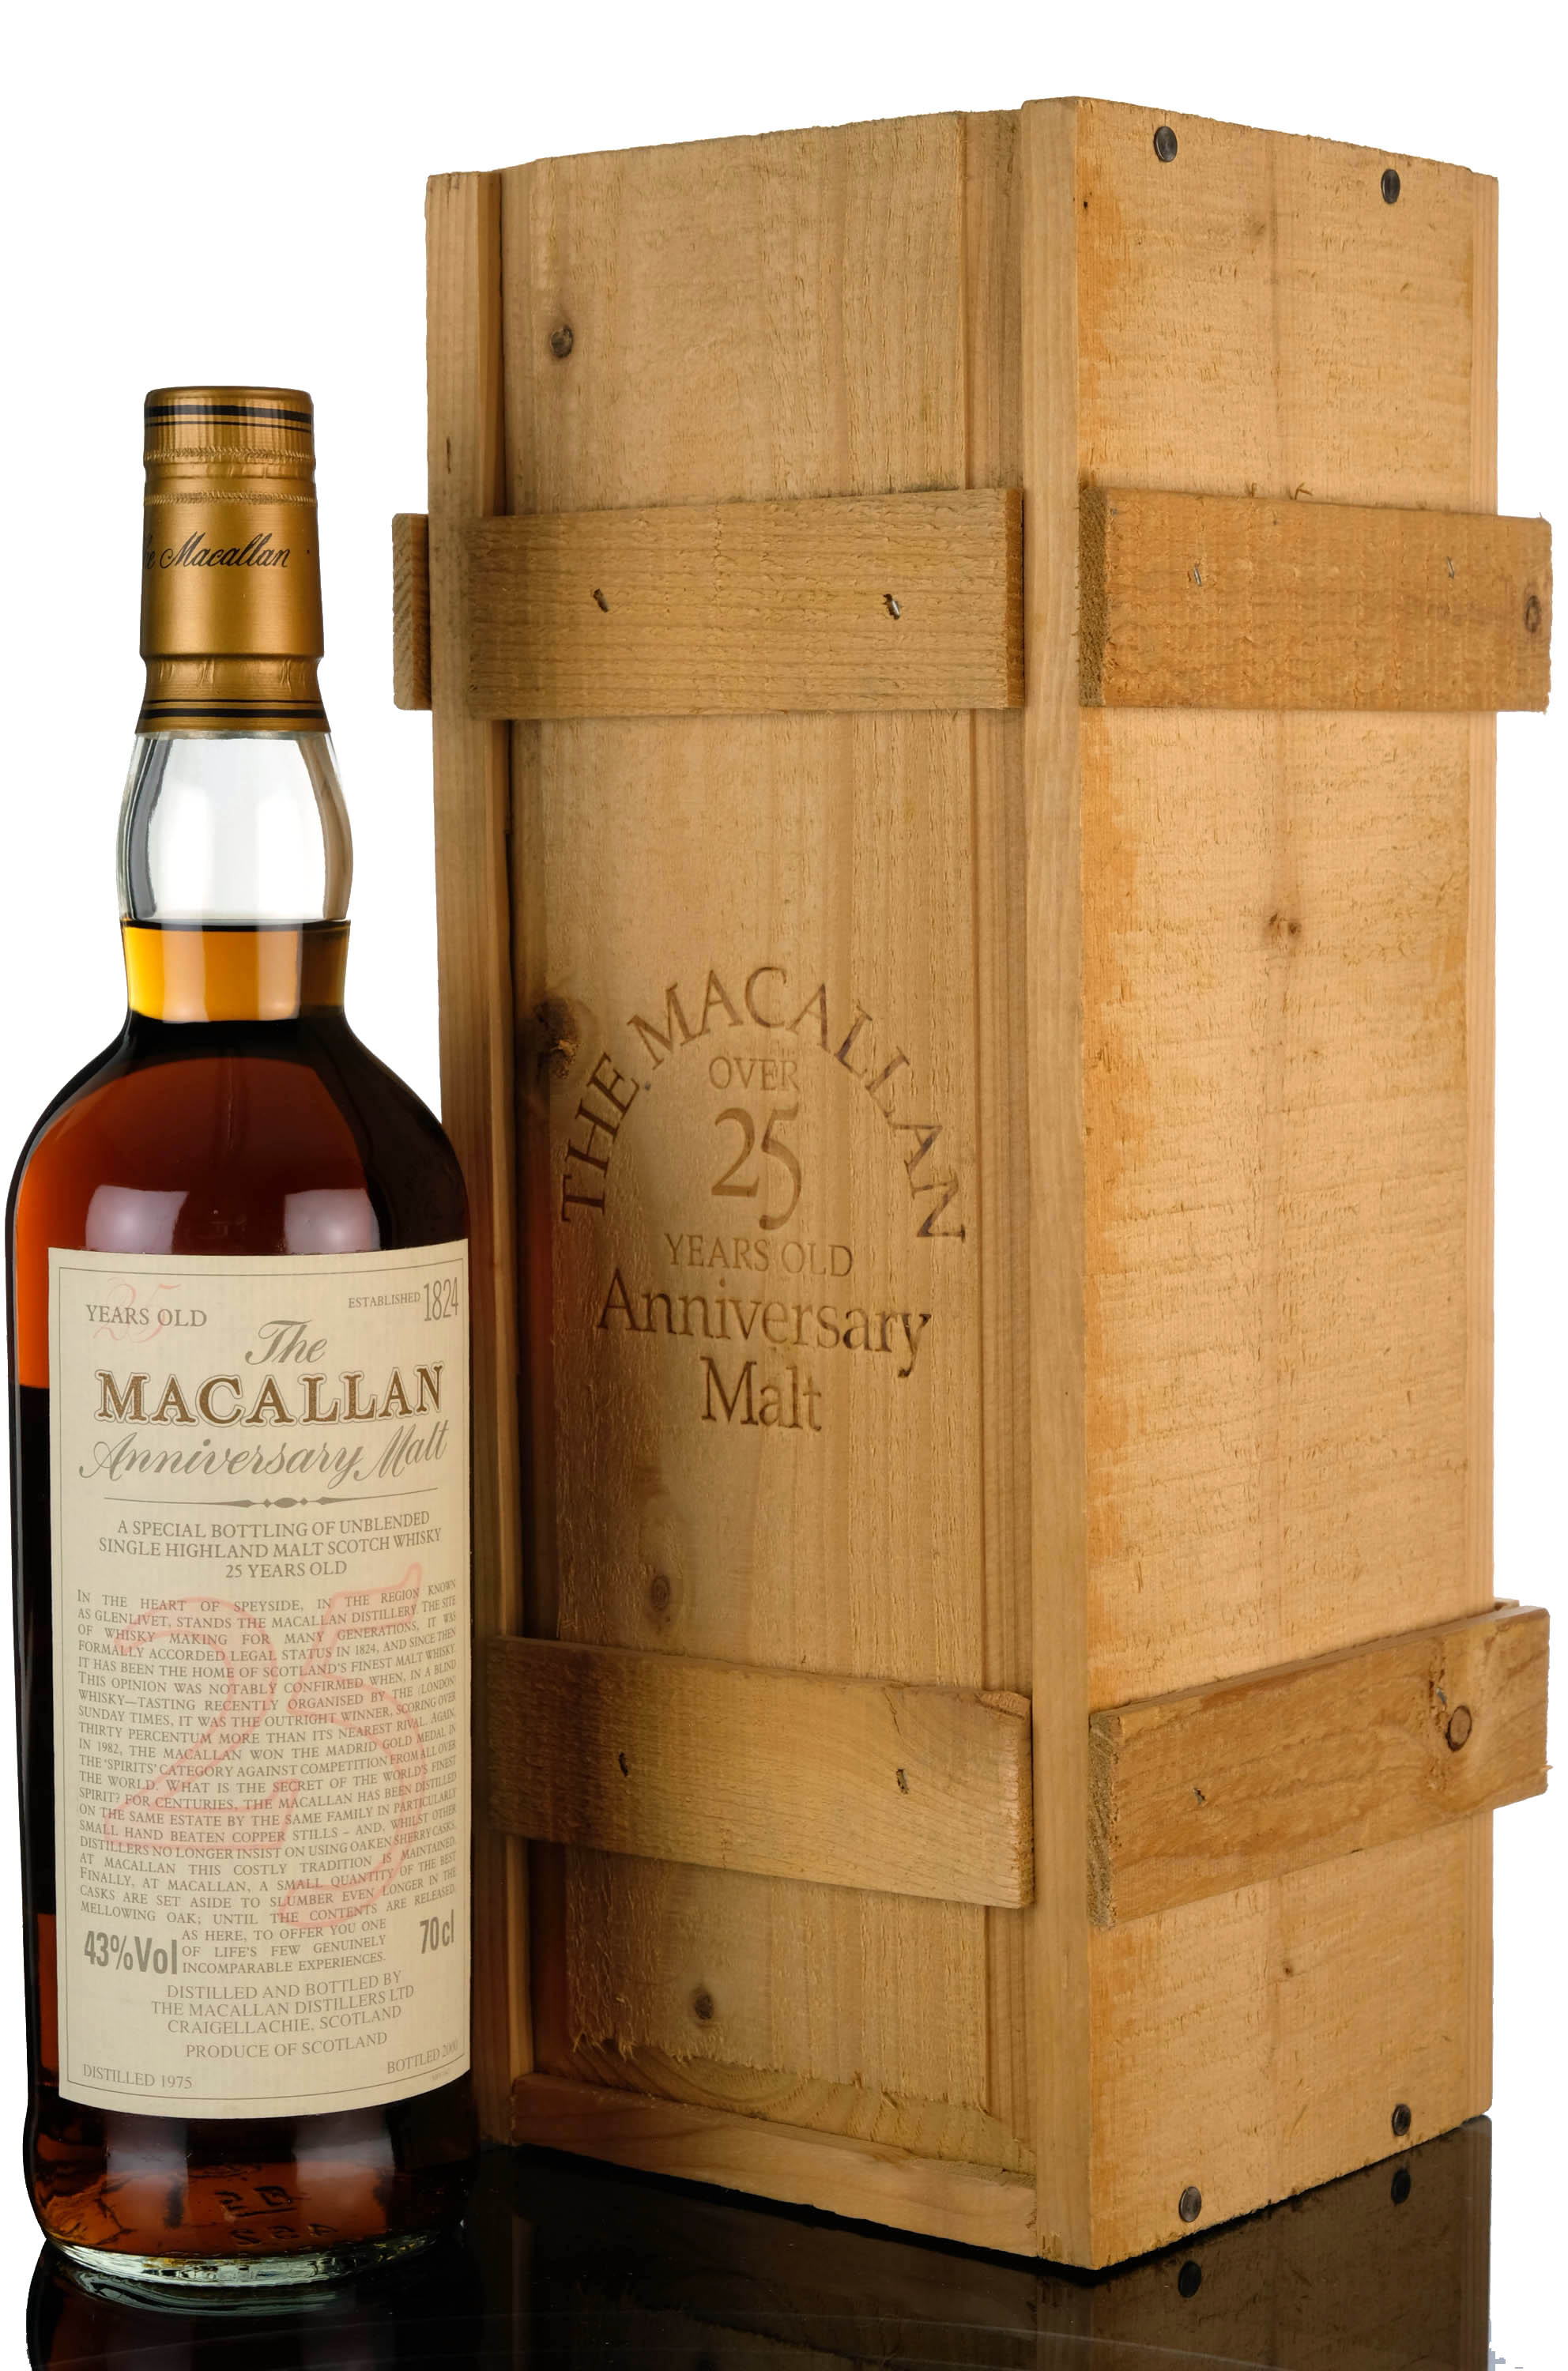 Macallan 1975-2000 - 25 Year Old Anniversary Malt